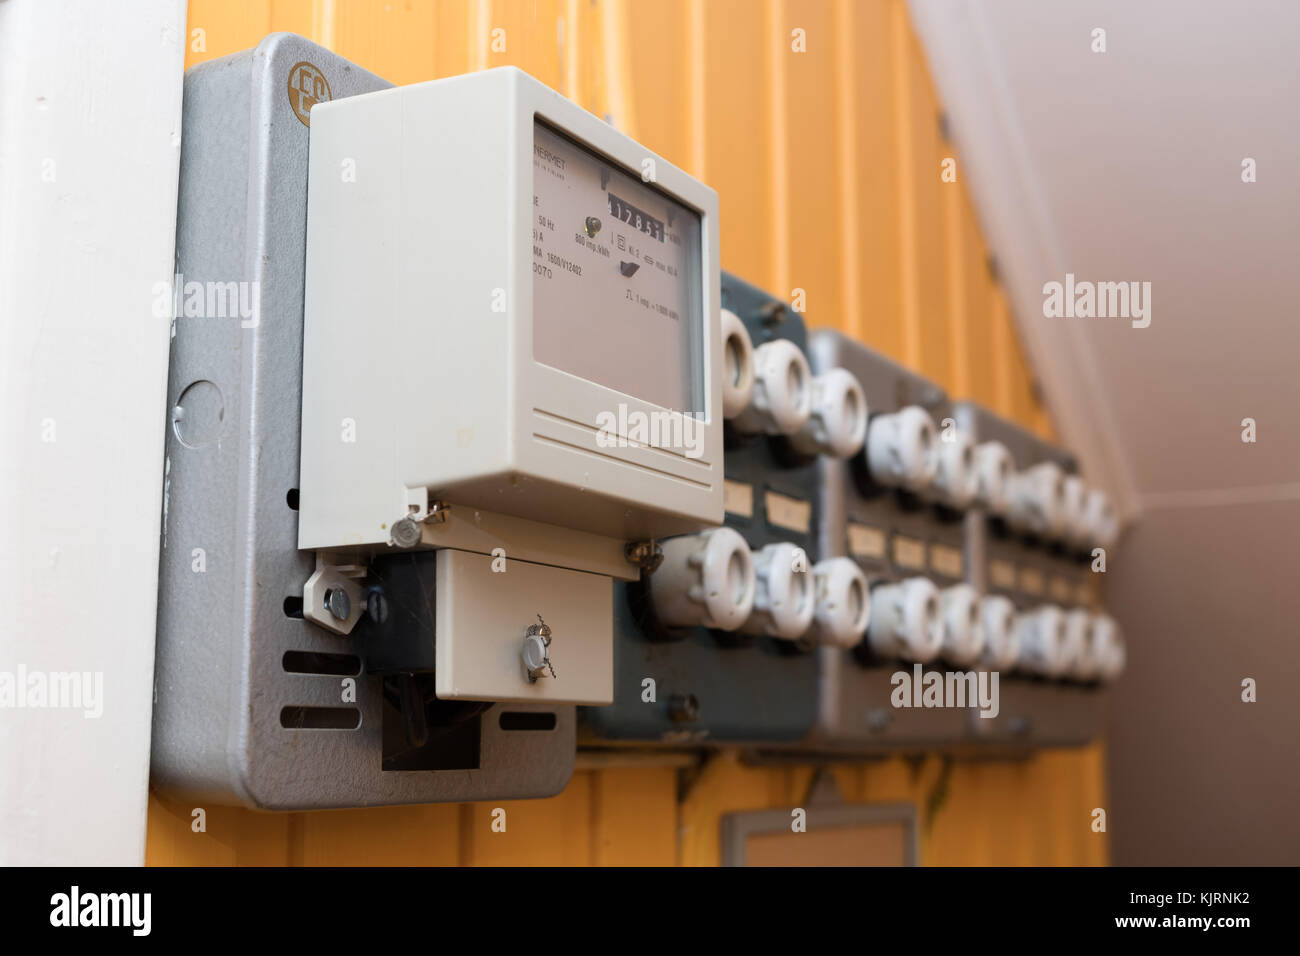 Caja de fusibles de casa fotografías e imágenes de alta resolución - Alamy